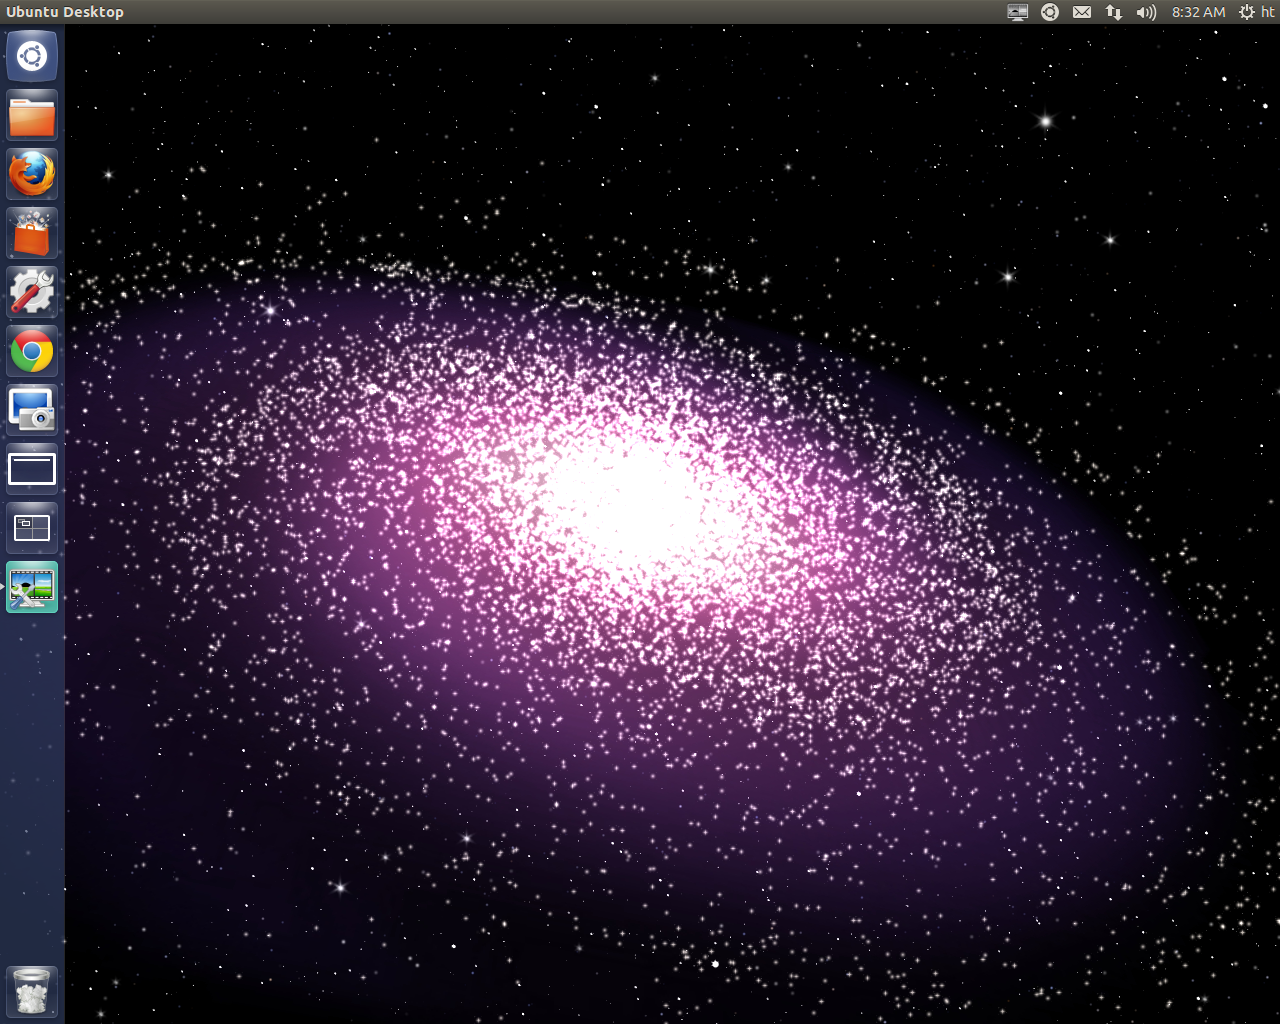 moving galaxy wallpaper,galaxy,astronomical object,text,screenshot,spiral galaxy